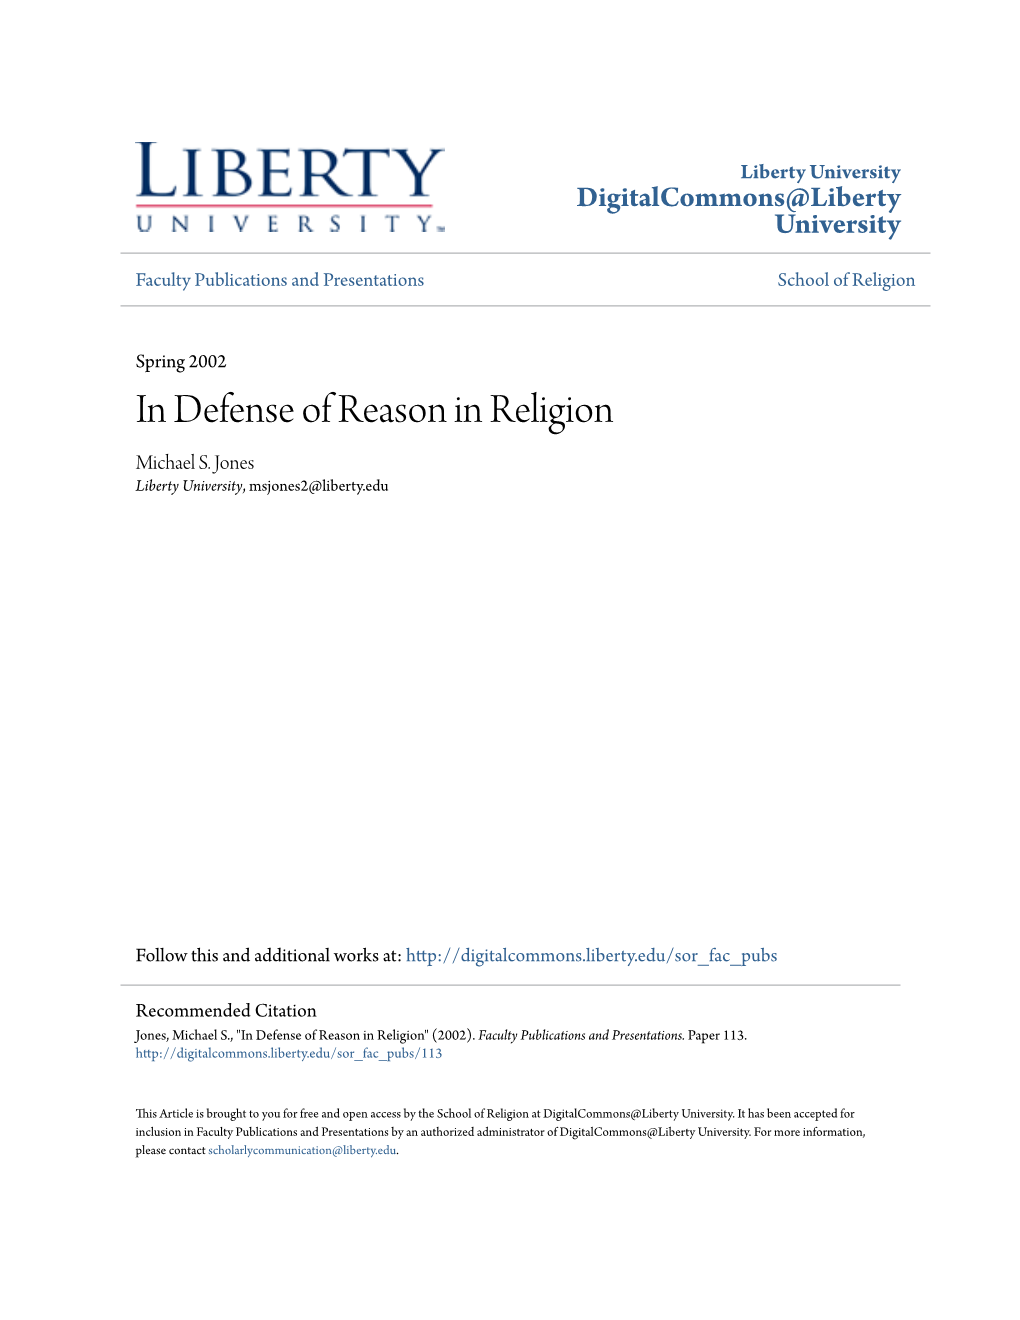 In Defense of Reason in Religion Michael S